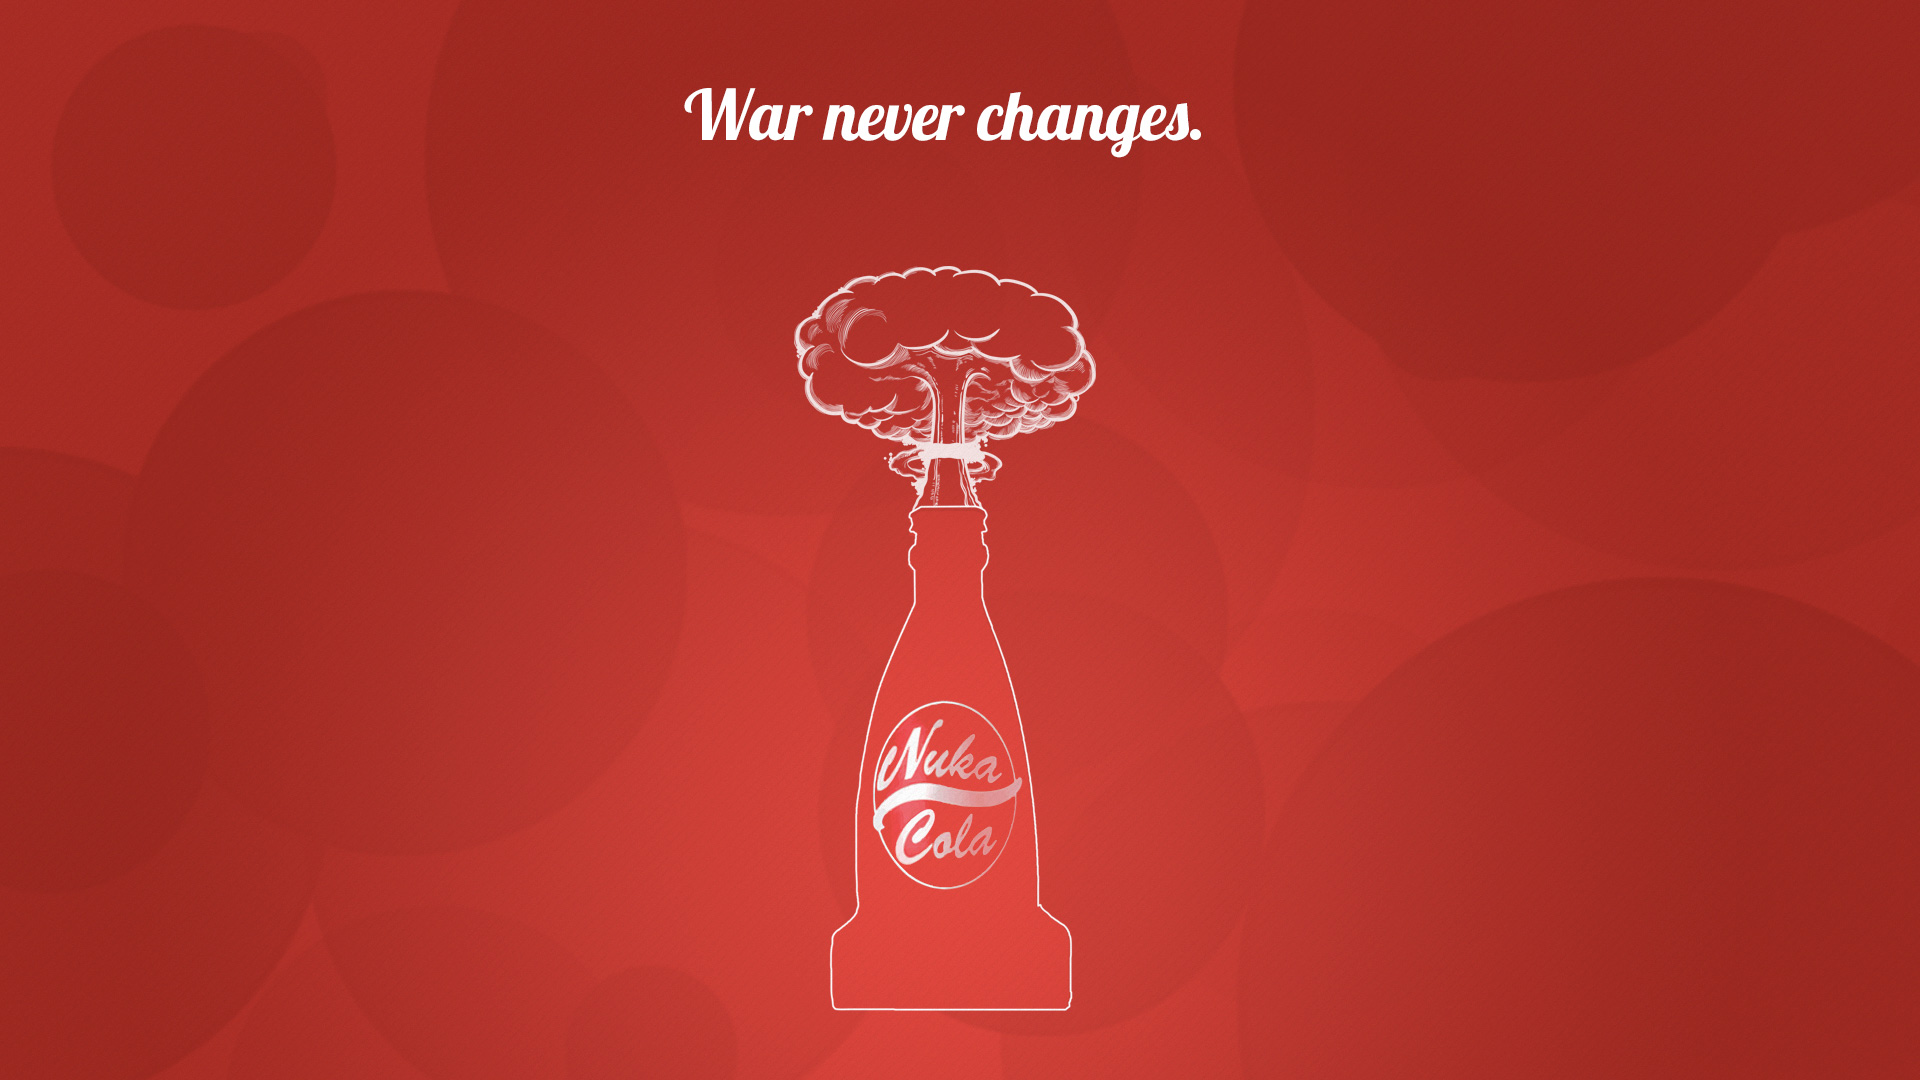 Fallout Nuka Cola Wallpaper Mobile And Desktop Versions